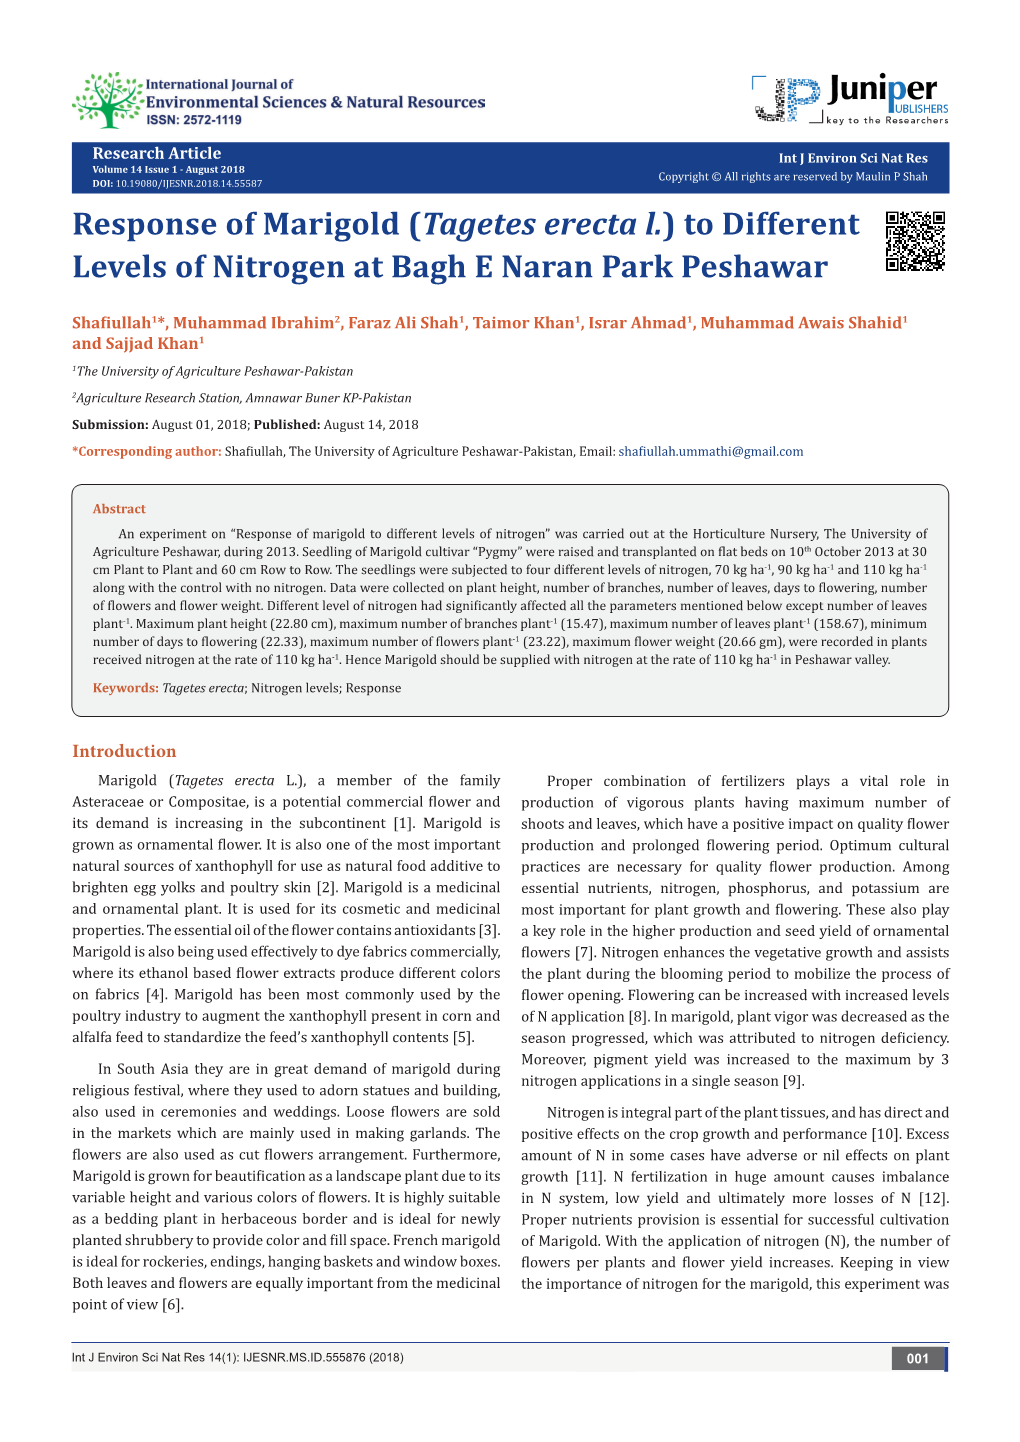 Response of Marigold (Tagetes Erecta L.) to Different Levels of Nitrogen at Bagh E Naran Park Peshawar